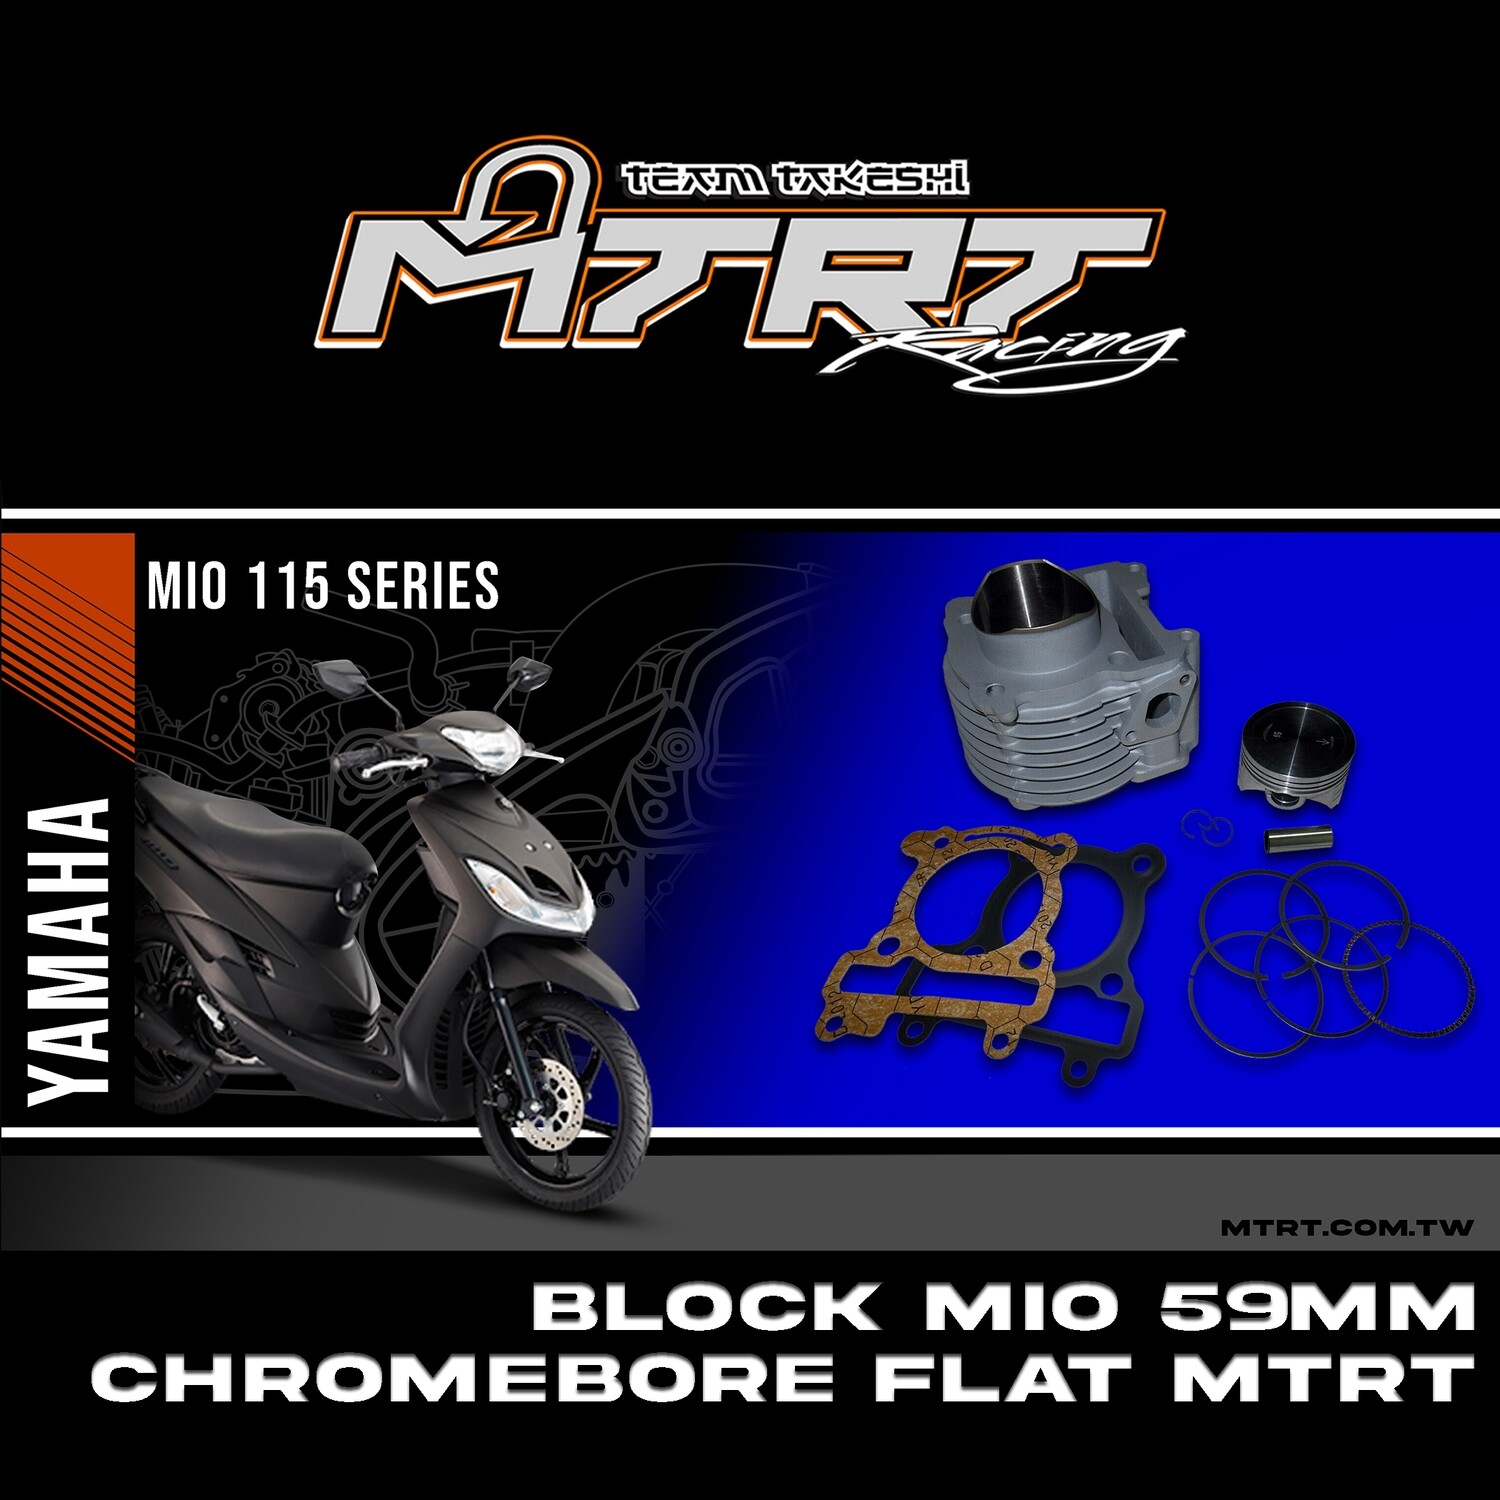 BLOCK MIO 59mm Chromebore FLAT MTRT